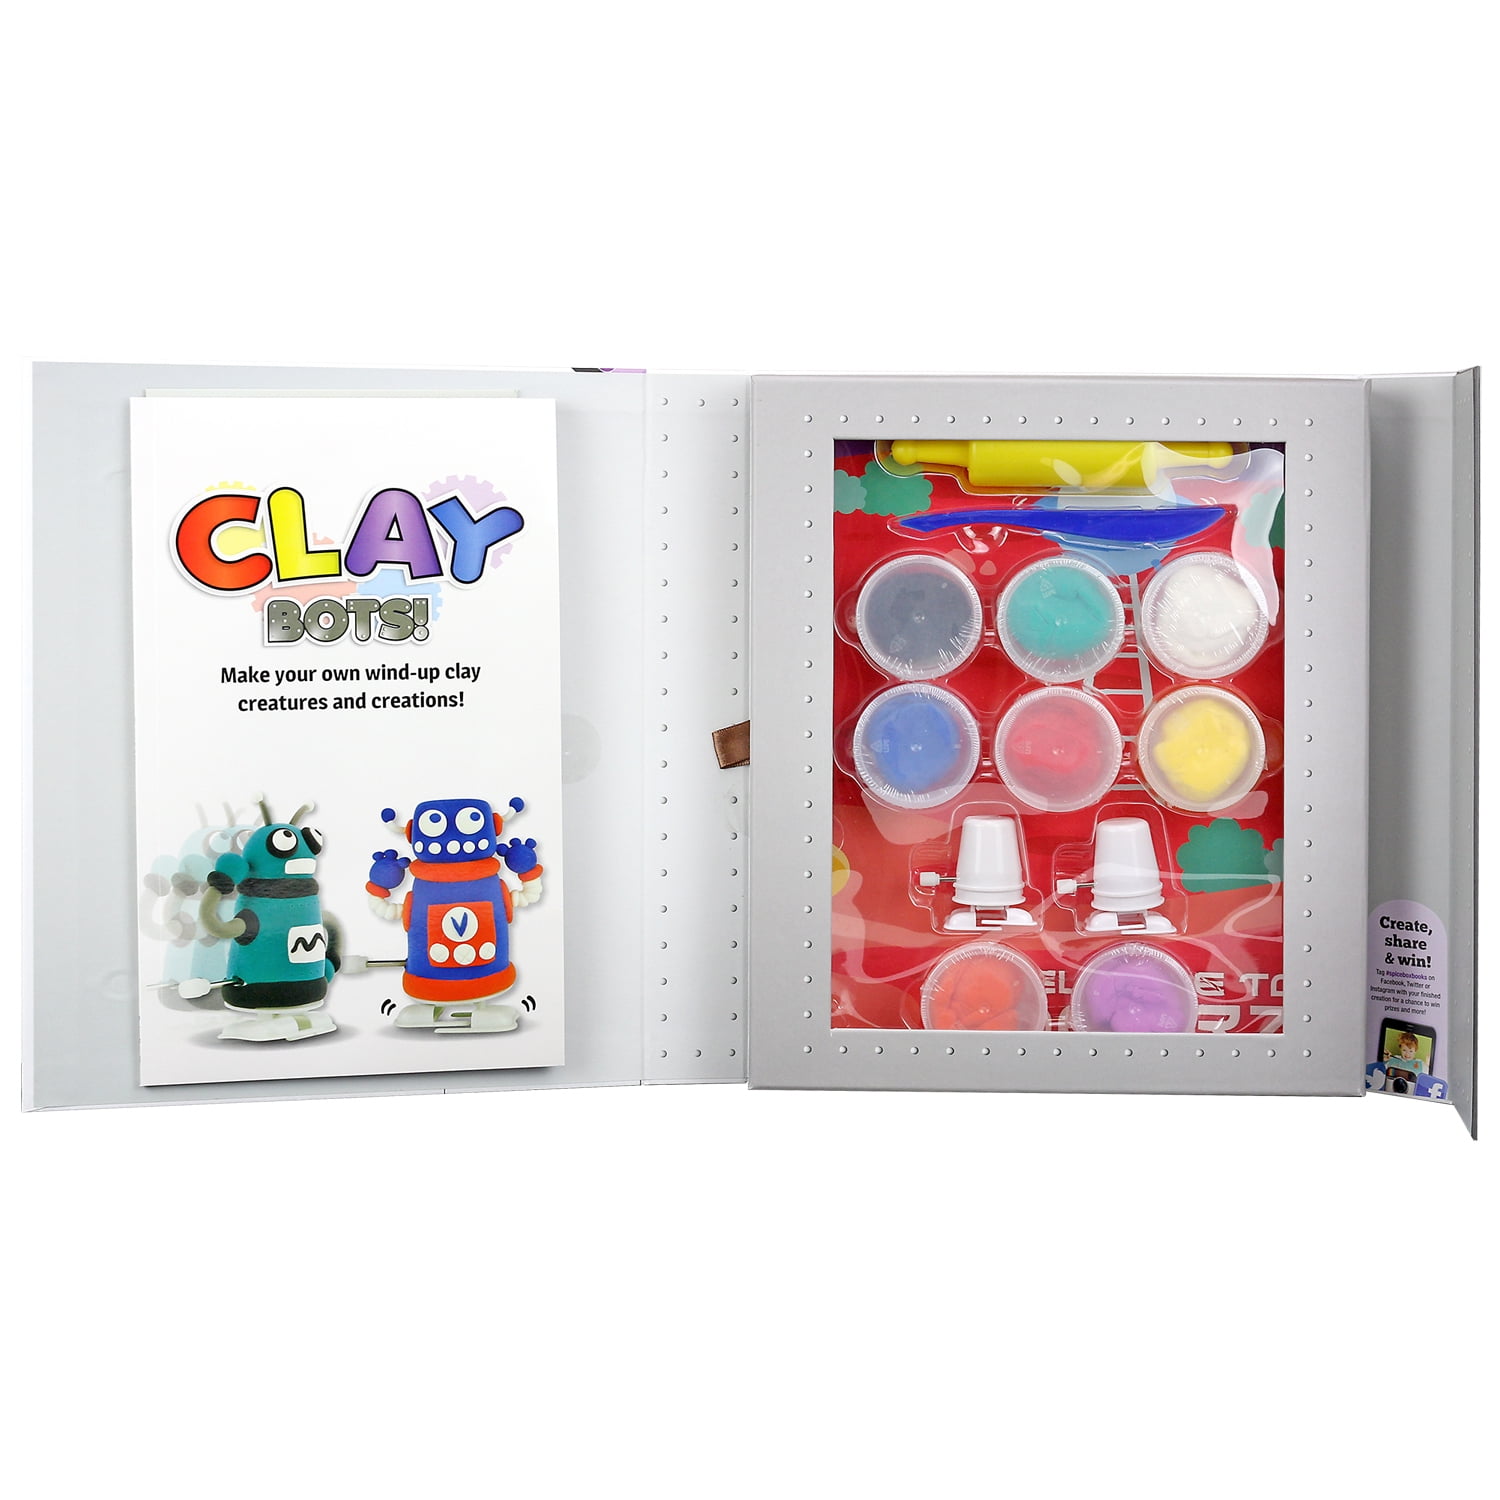 SpiceBox Children's Activity Kits for Kids Gel Pens Age Range 8+